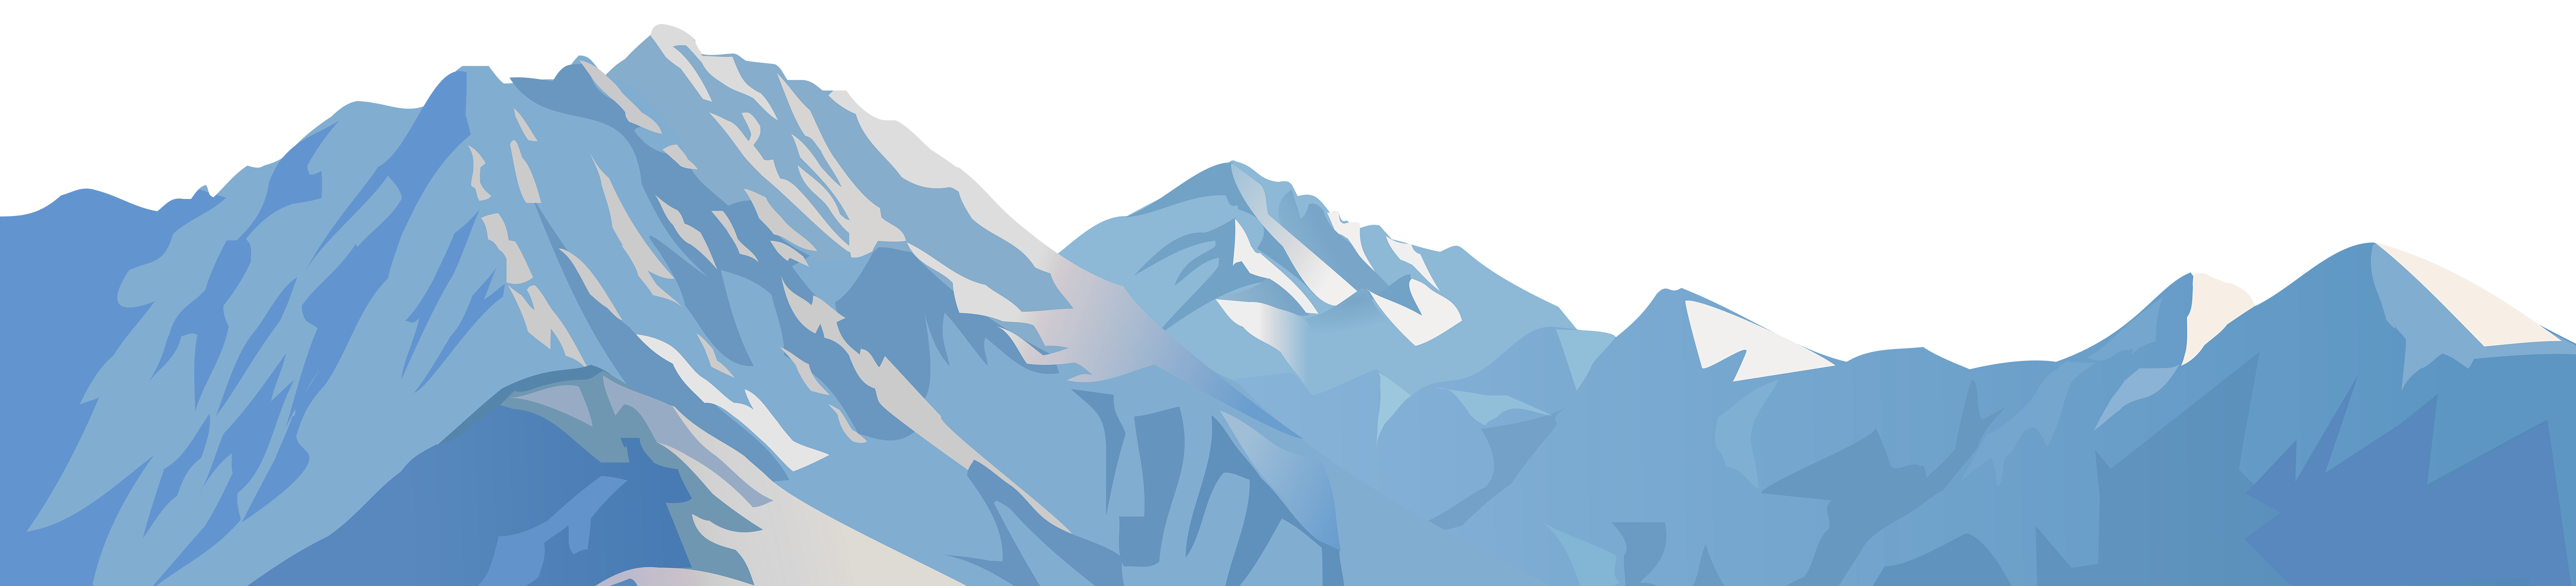 Winter clipart mountains. Snowy mountain transparent clip